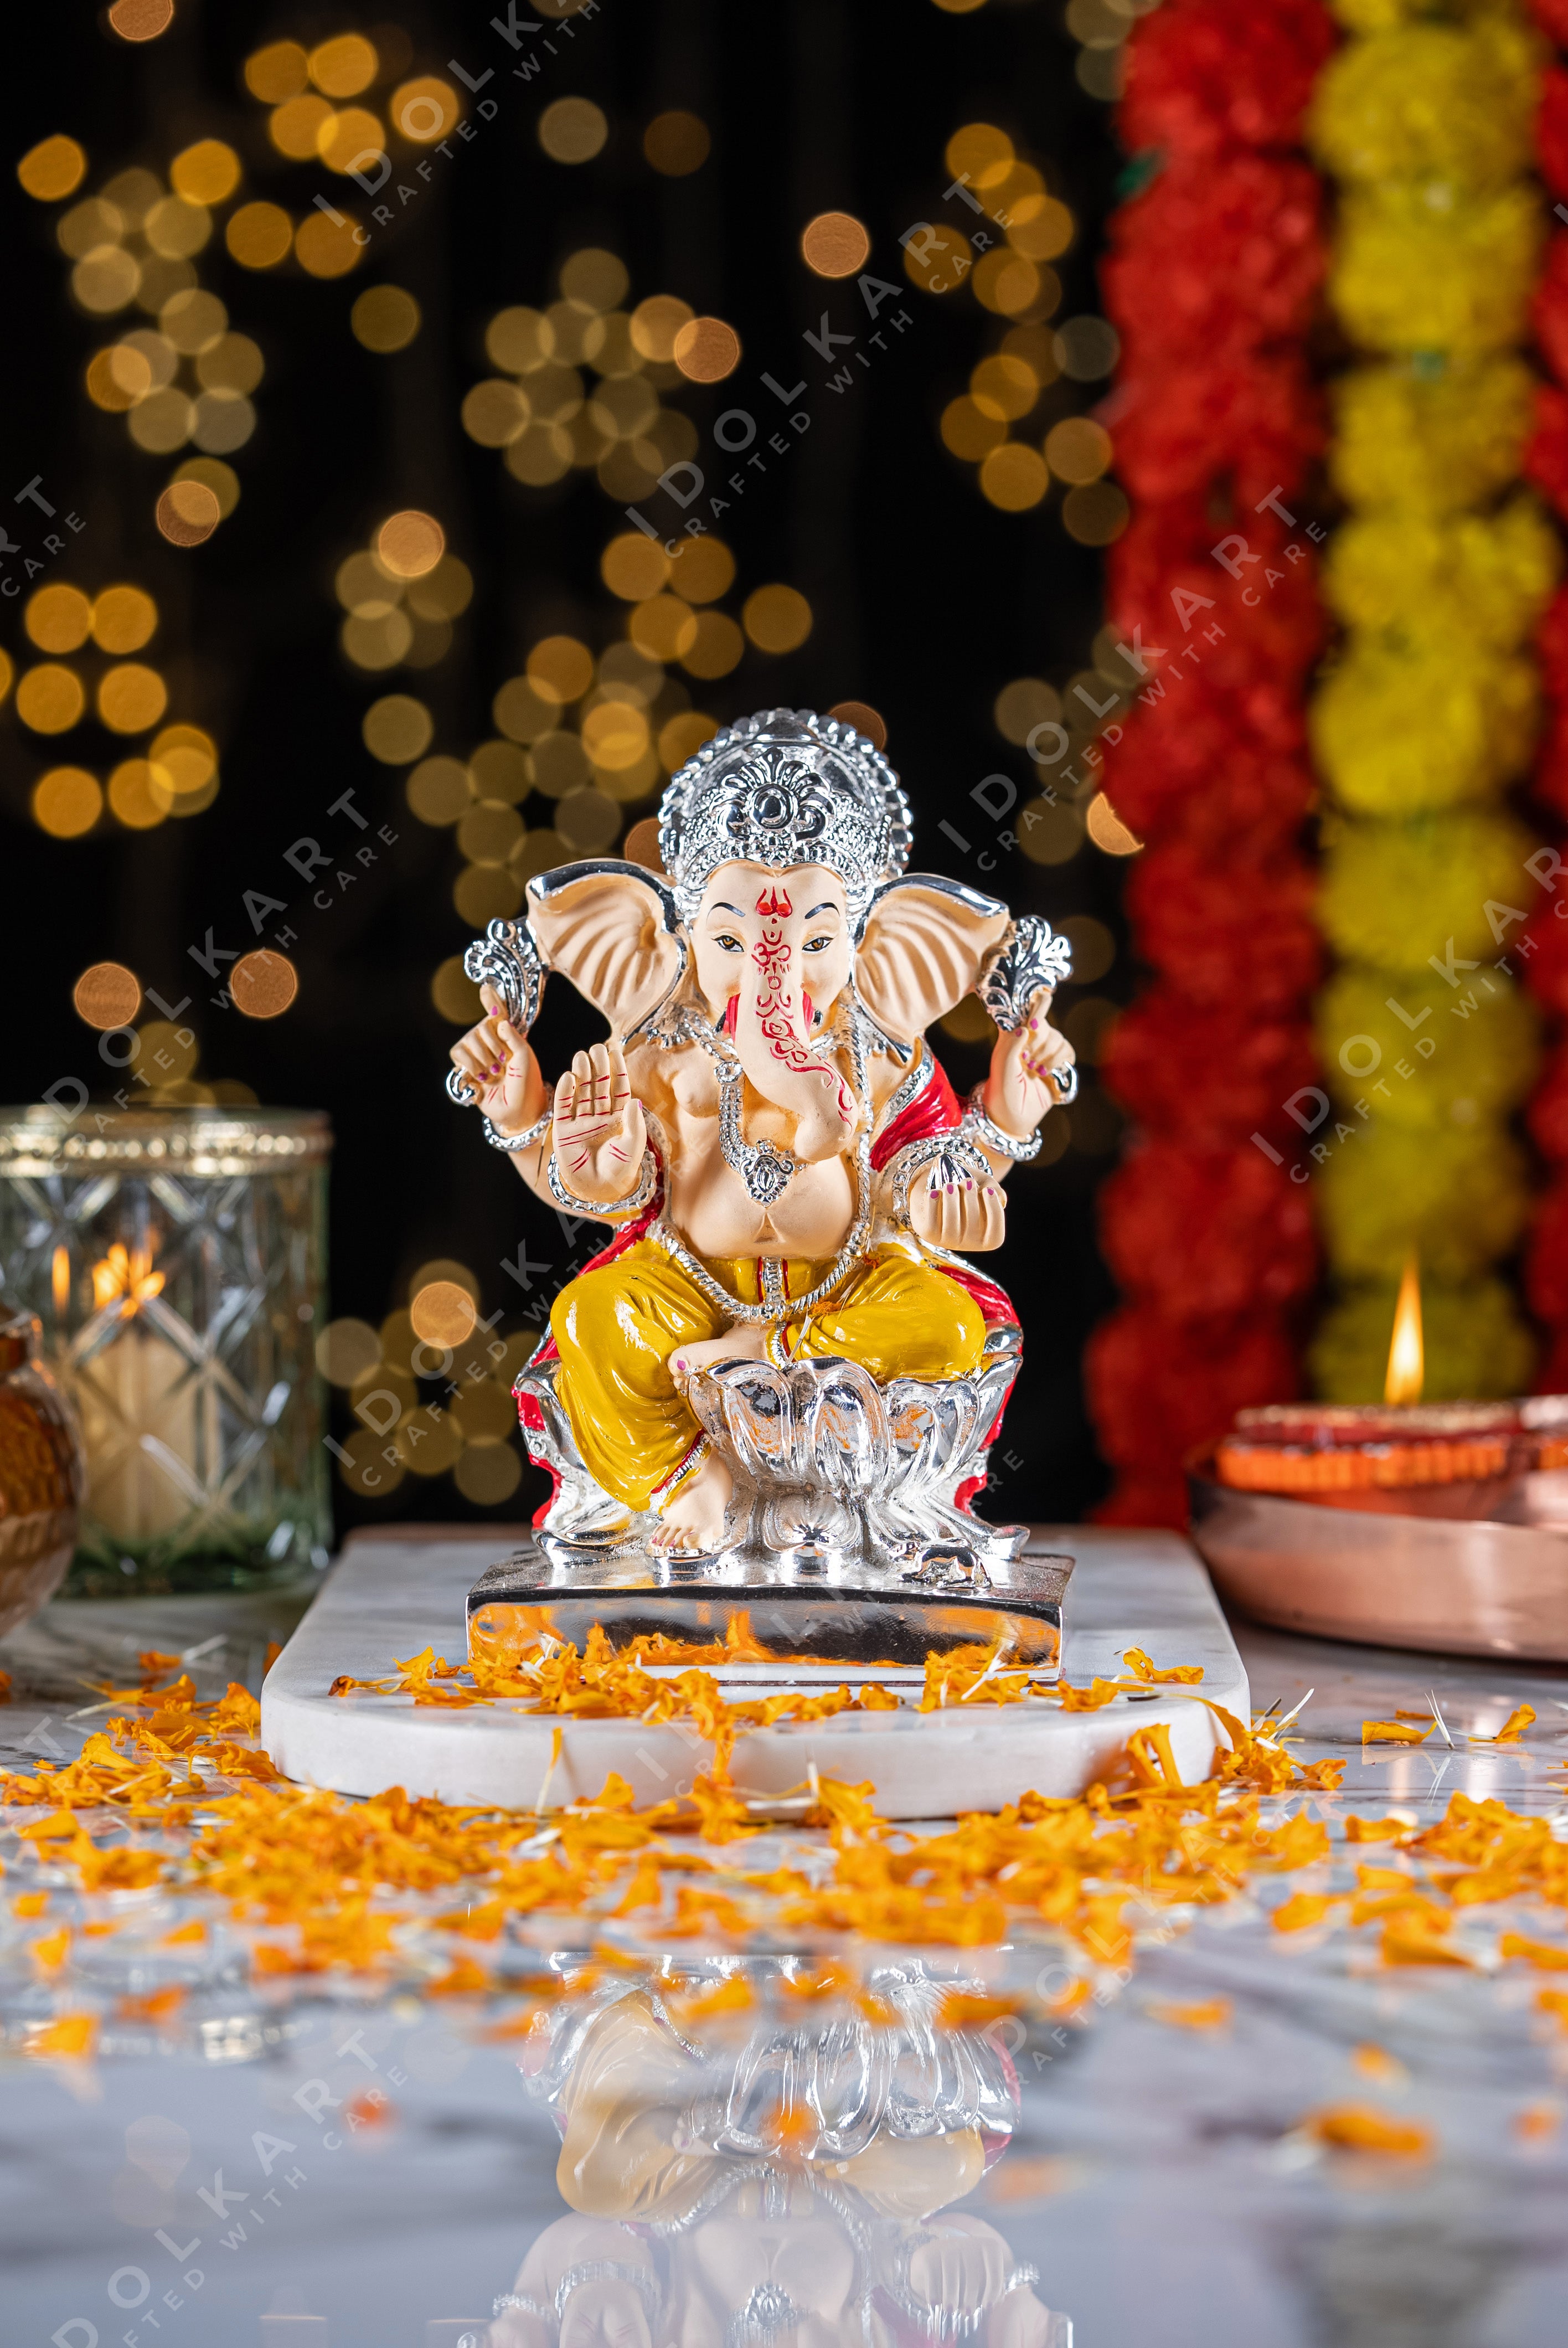 Pure Silver Coated Ganesha Lakshmi Murti | Laxmi Ganesh Idol Sitting on Lotus for Home Office Pooja Room Decor | Pure Silver Gift Item for Home Office Warming Wedding Marriage Diwali Dhanteras